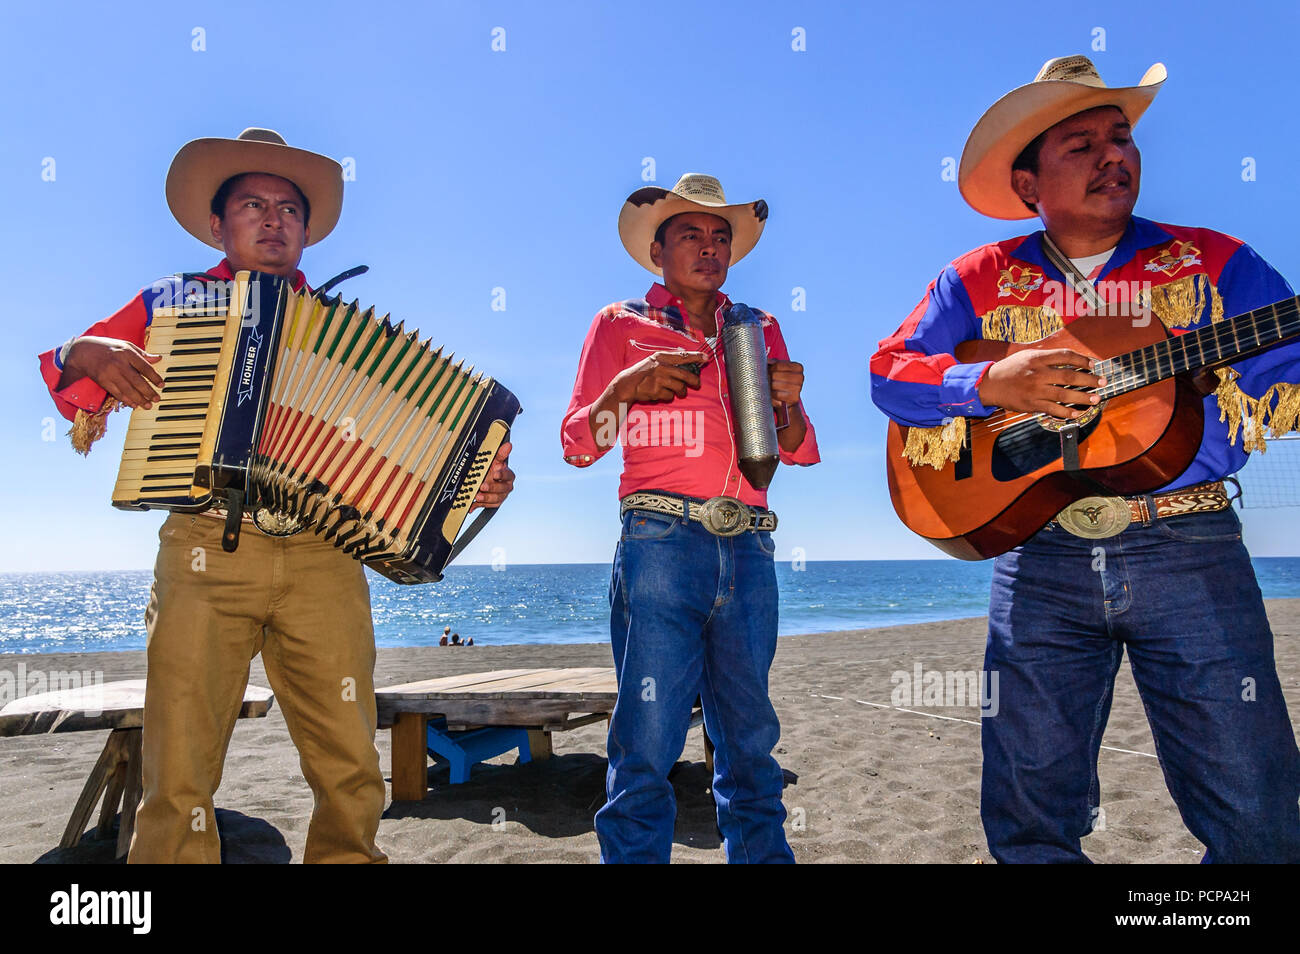 Monterrico, Santa Rosa, Guatemala - February 1, 2015: Mariachi musicians perform for beach goers at Monterrico beach in Santa Rosa department. Stock Photo